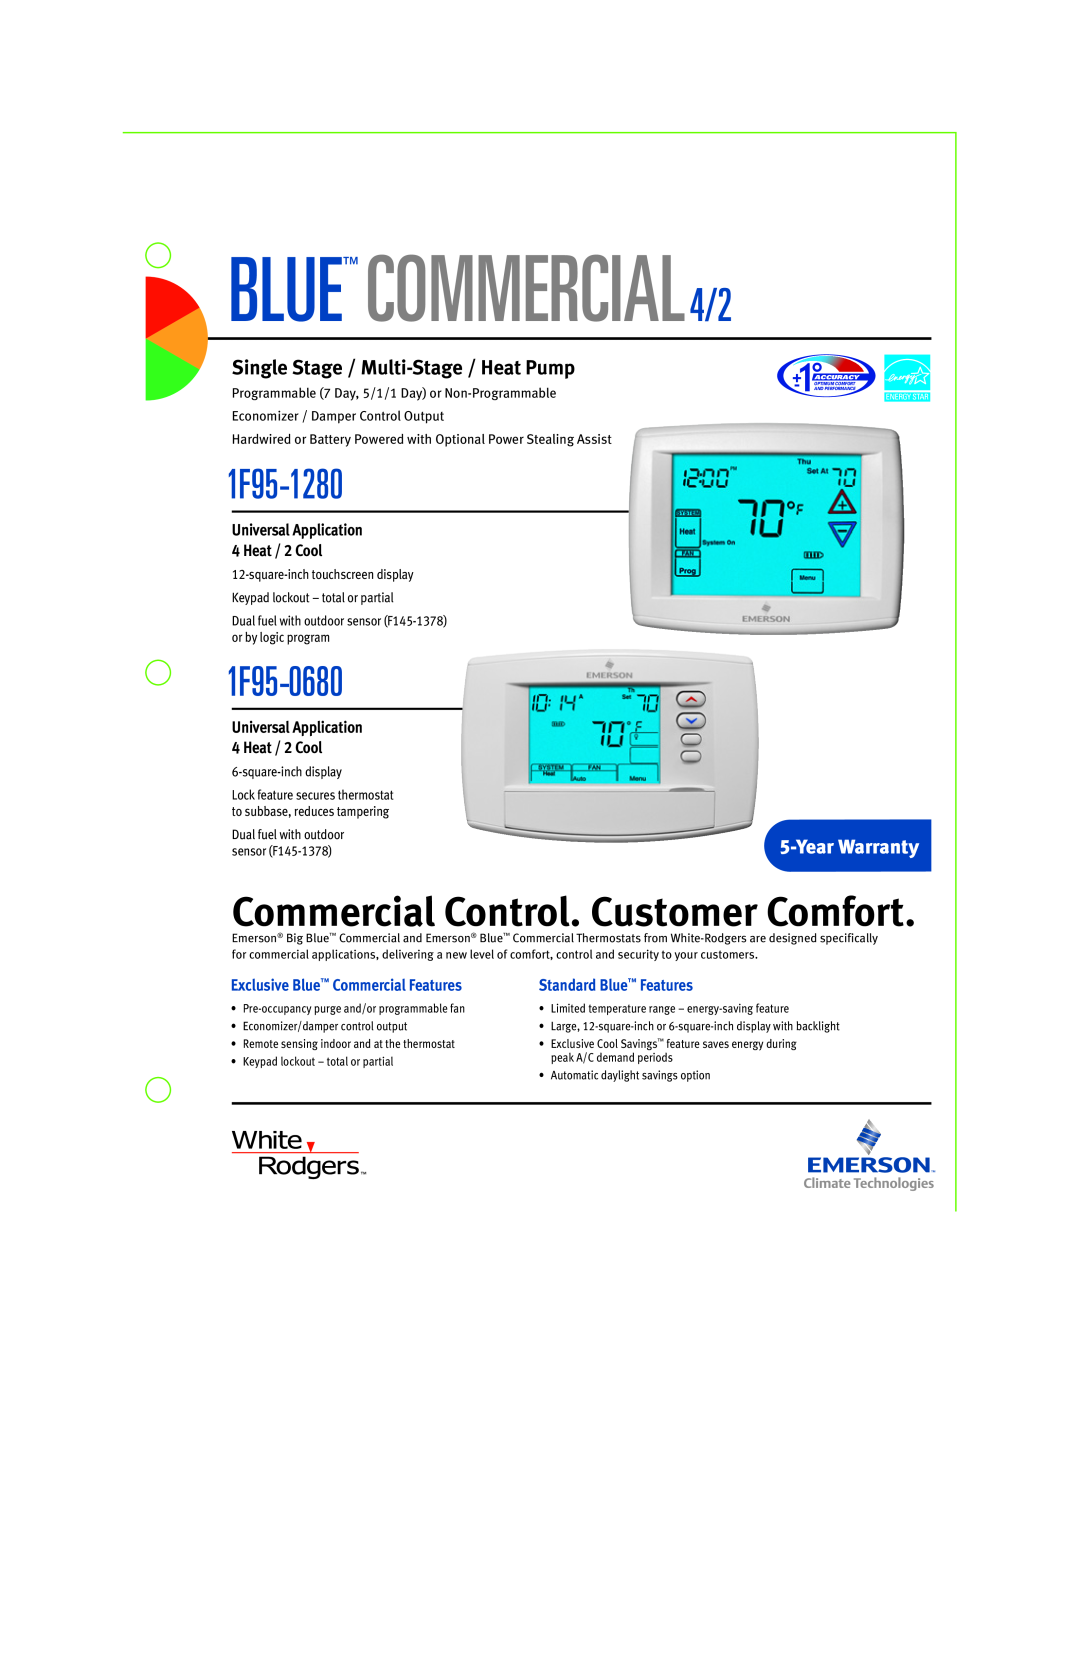 Emerson 1F95-0680 warranty BLUE COMMERCIAL4/2, 1F95-1280, Commercial Control. Customer Comfort, YearWarranty 